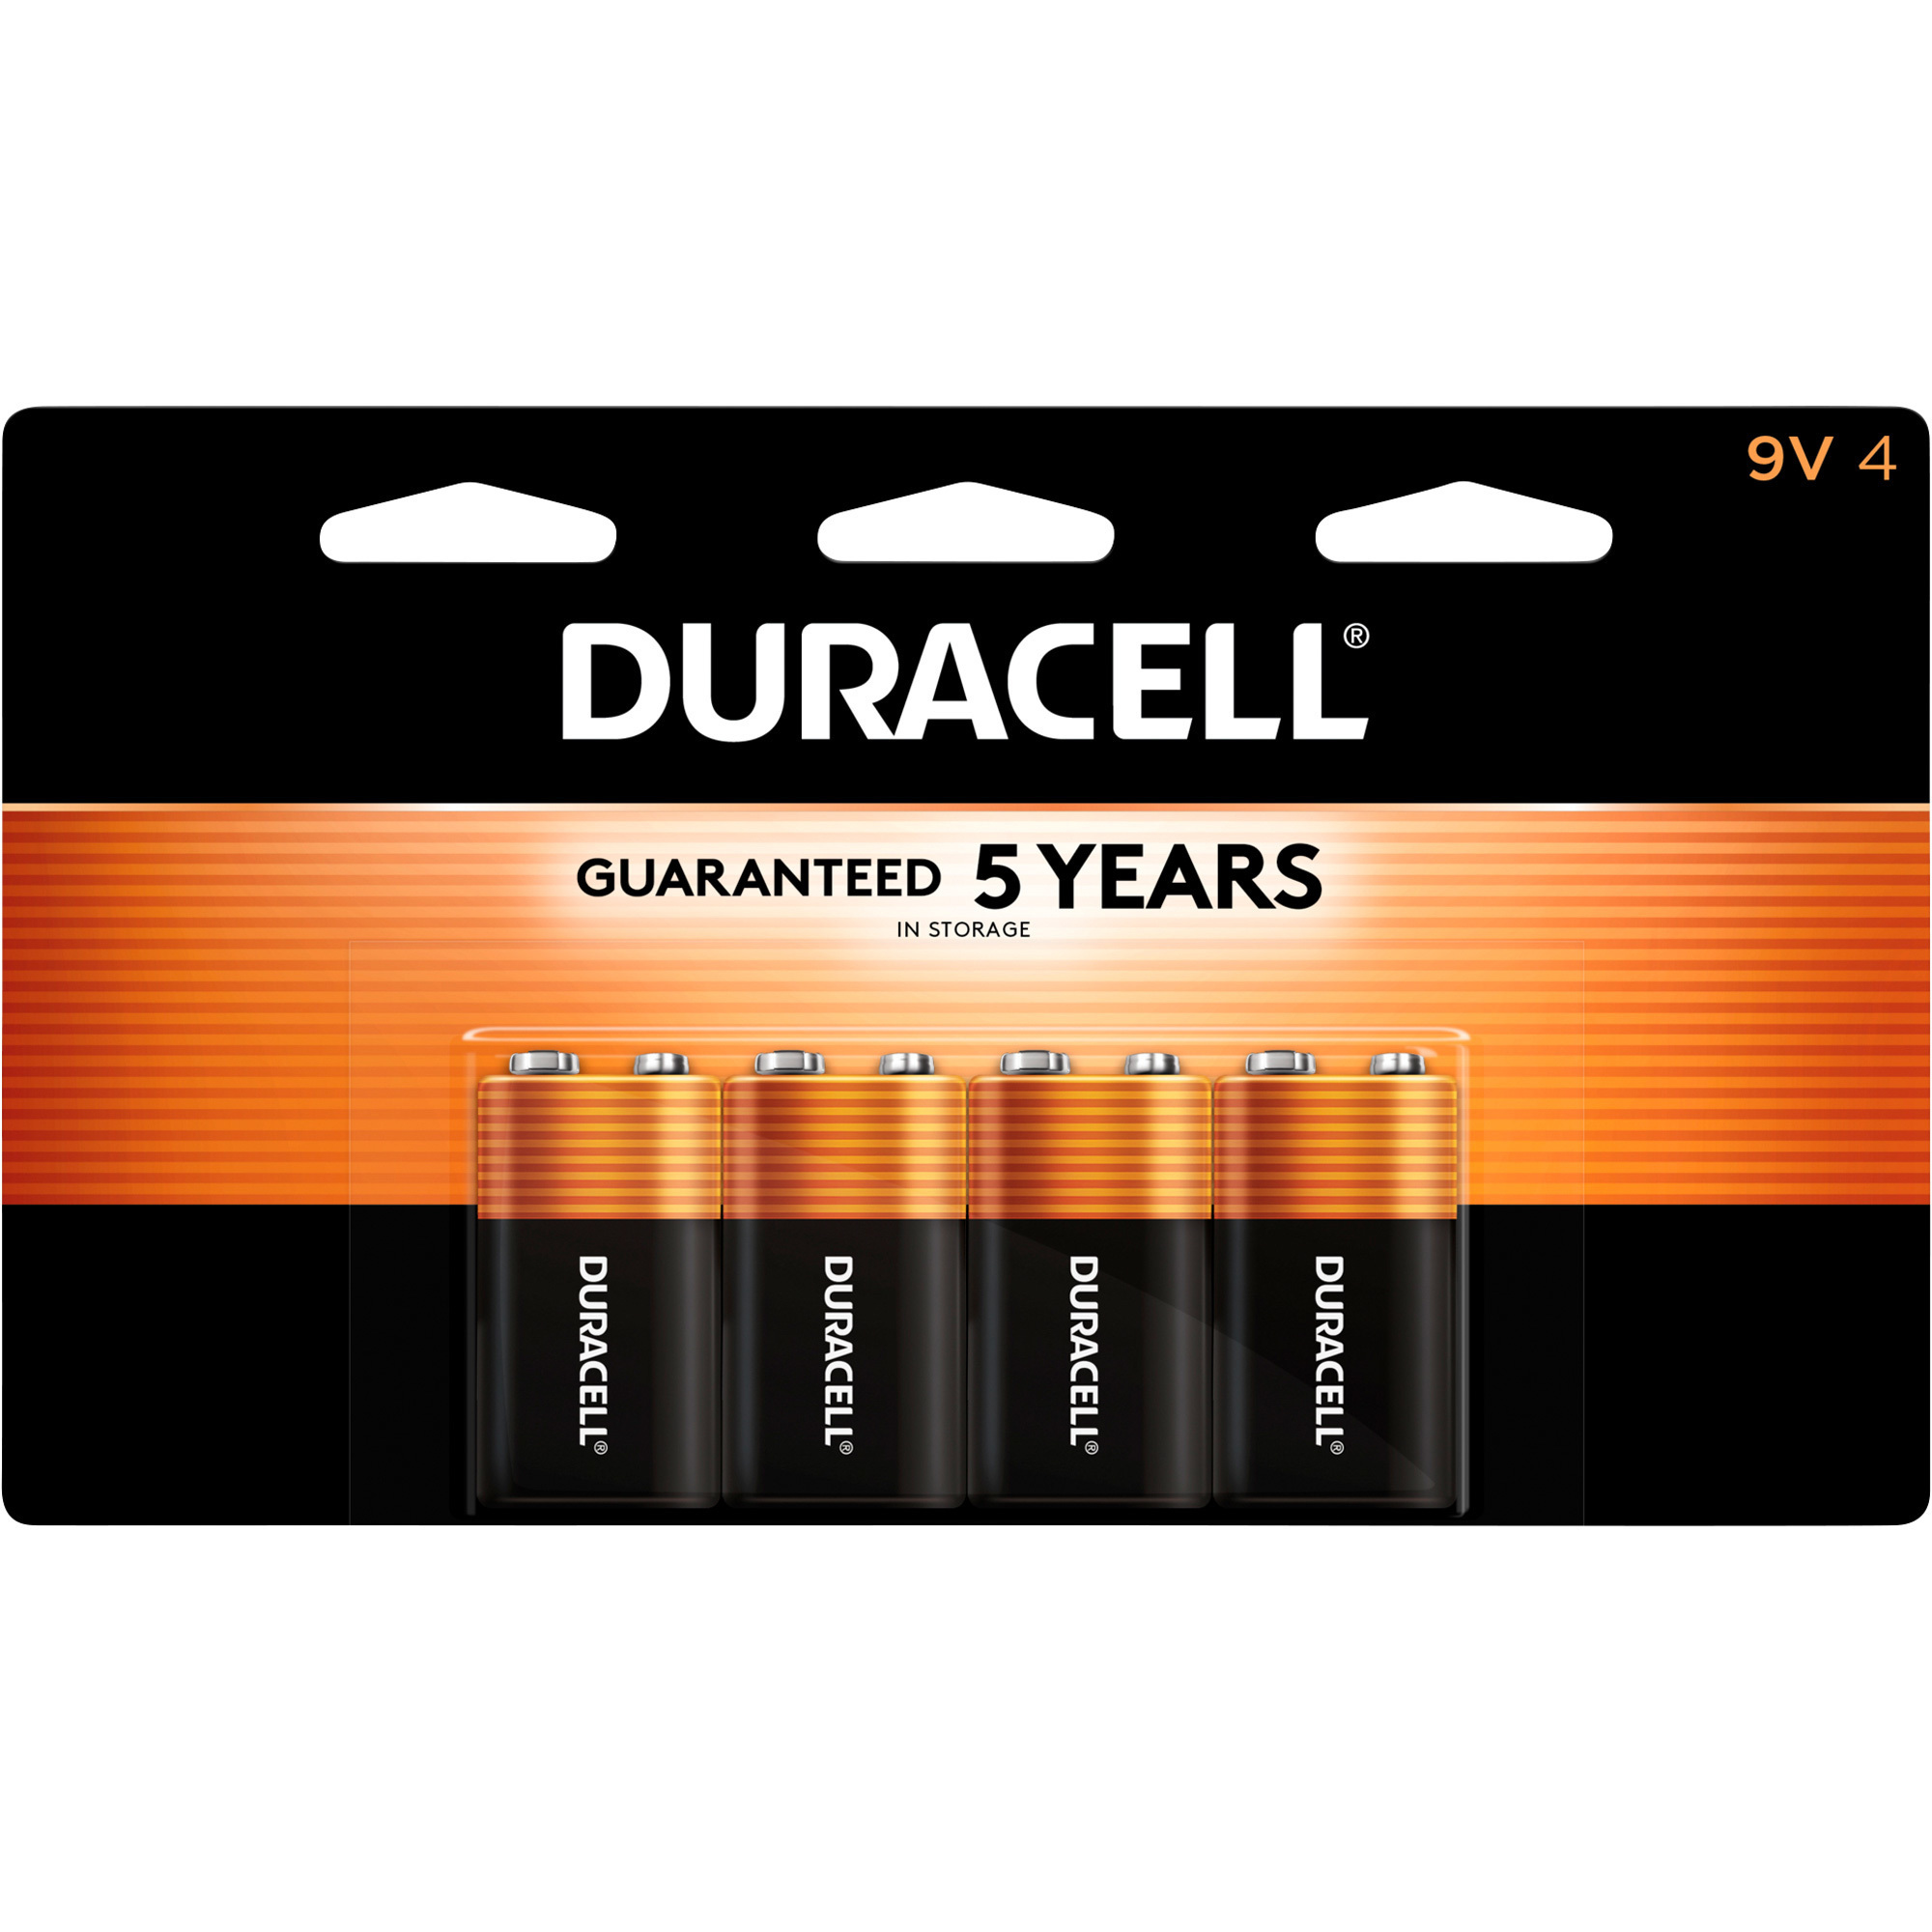 Duracell Coppertop 9 Volt Alkaline Batteries â 4-Pack